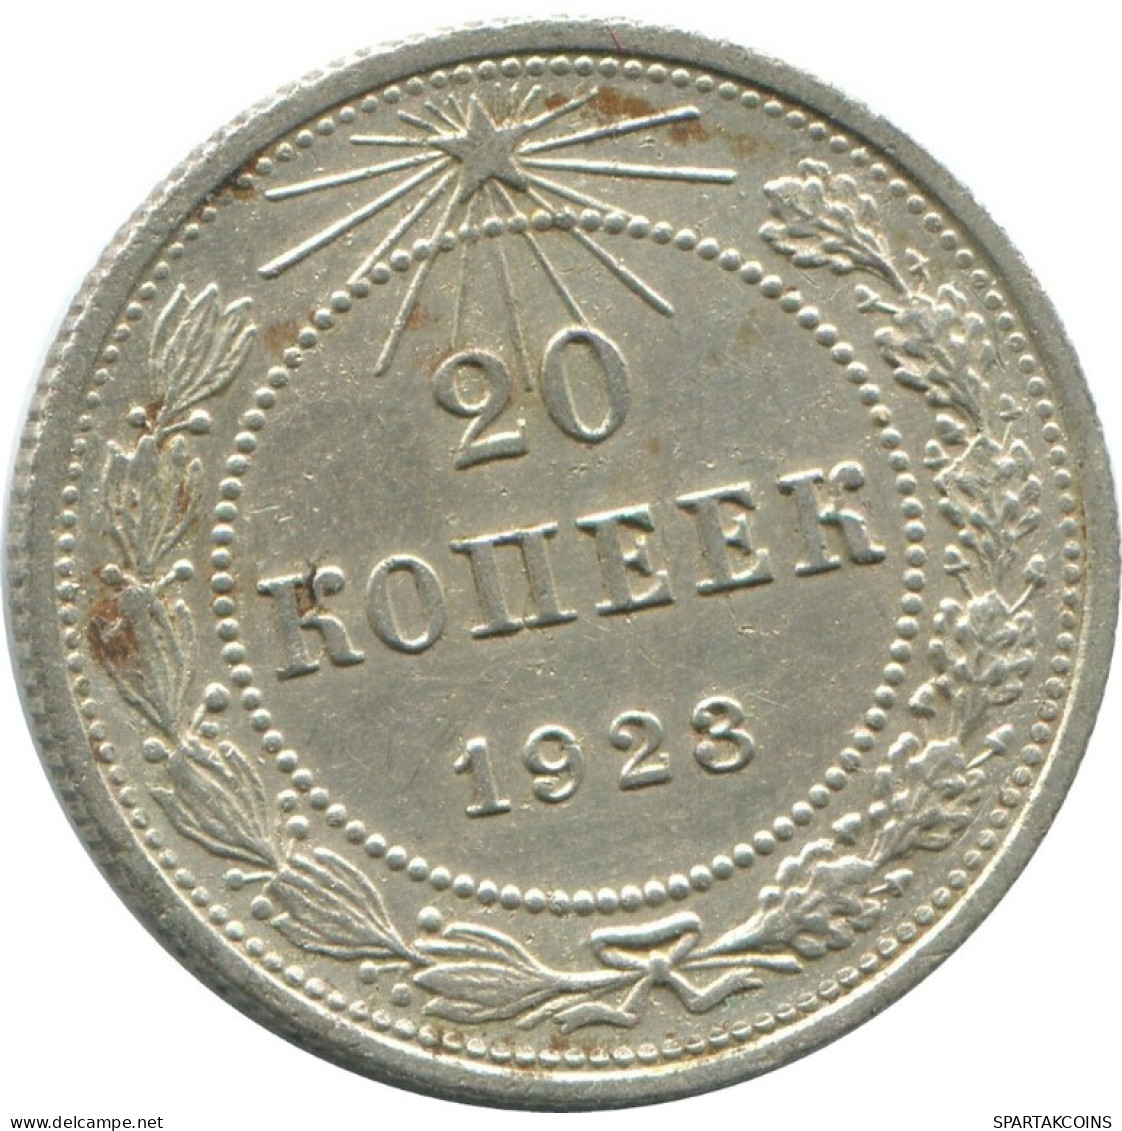 20 KOPEKS 1923 RUSSIA RSFSR SILVER Coin HIGH GRADE #AF698.U.A - Russie